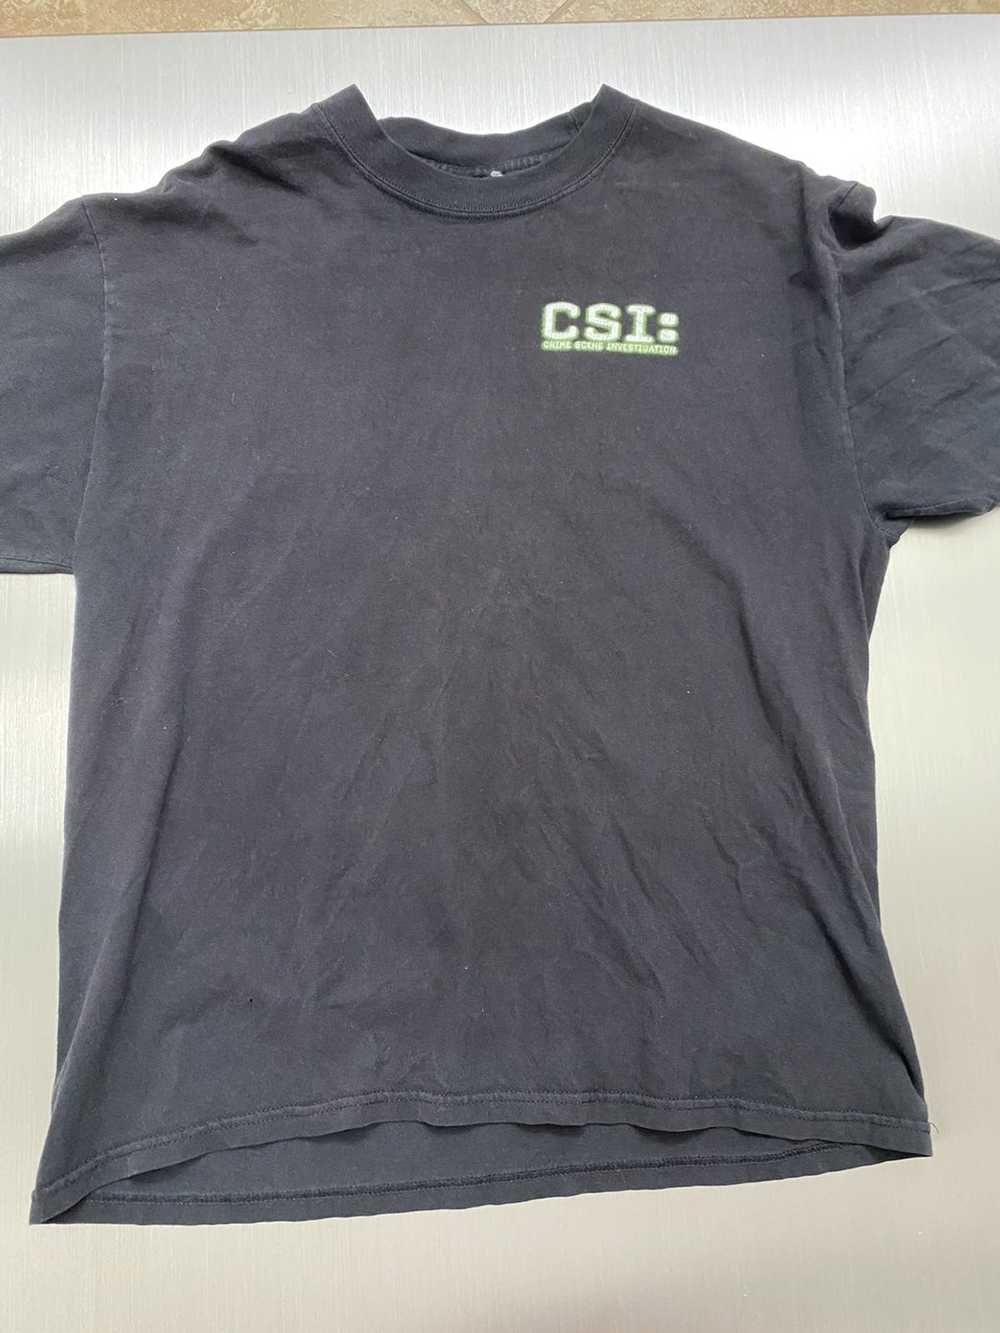 Vintage Vintage 2001 CSI T Shirt - image 4